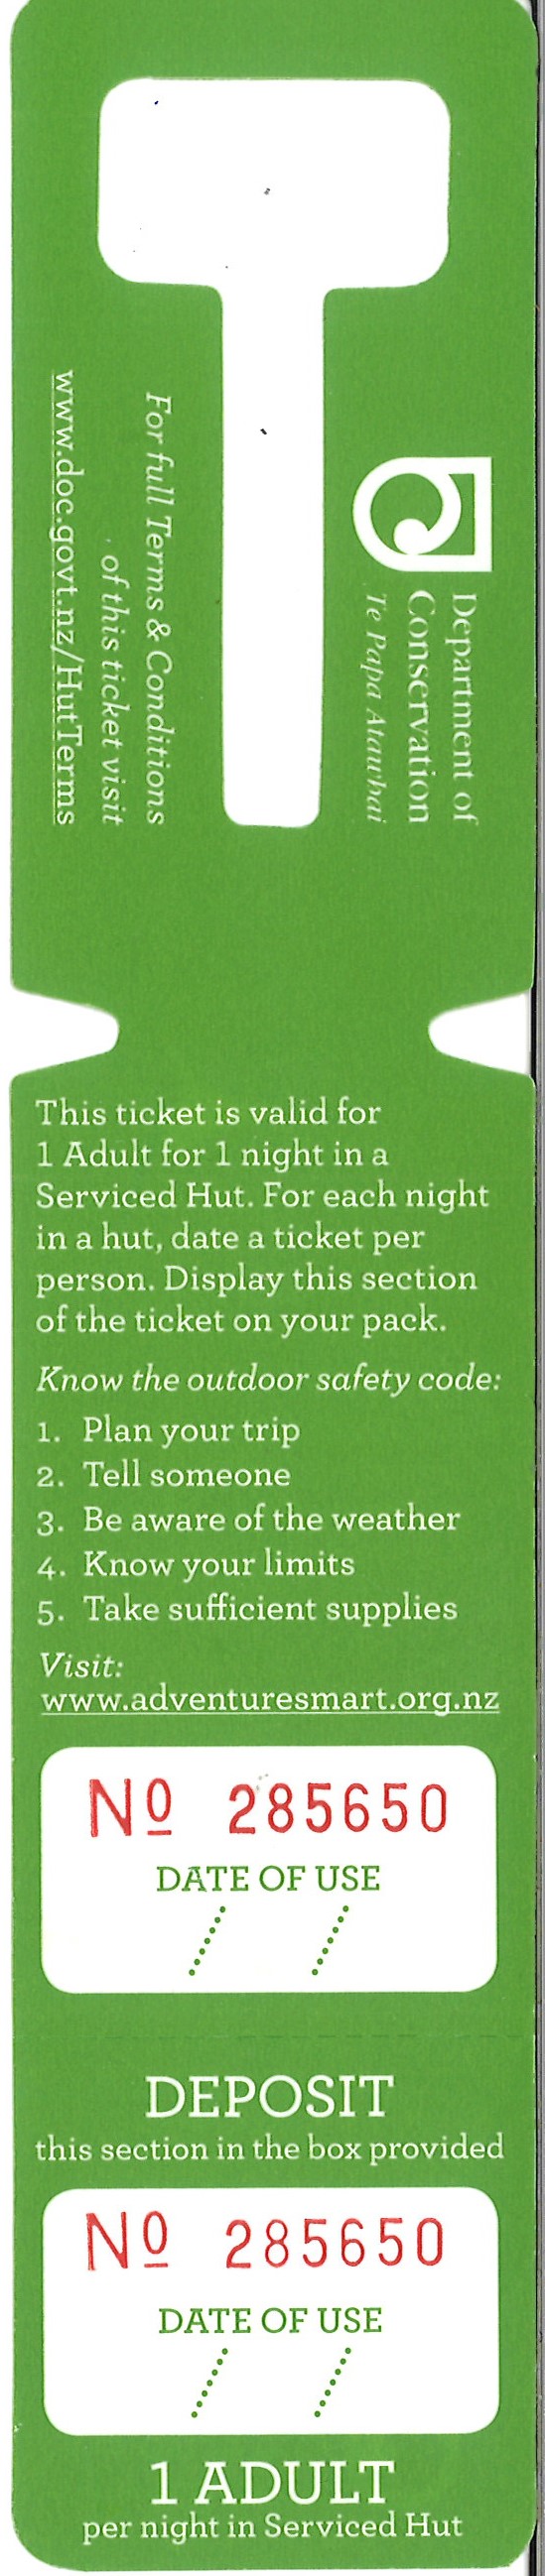 DoC Hut ticket - Serviced Adult